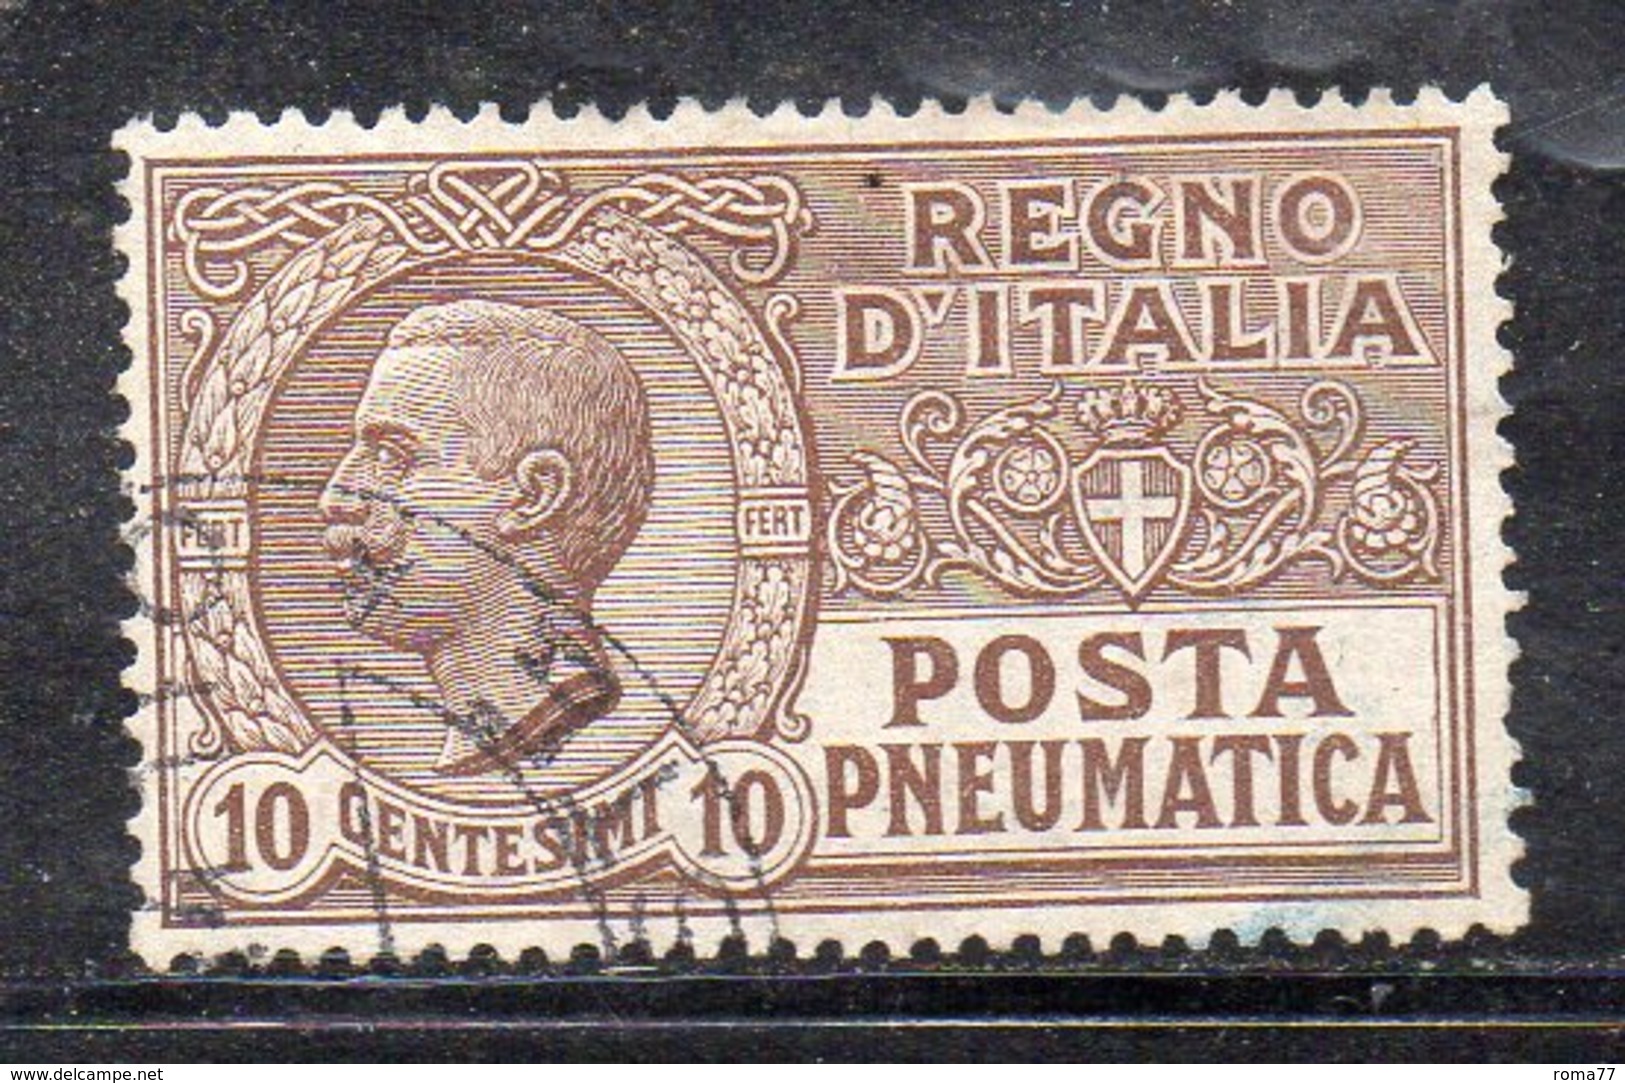 T16 - REGNO 1914 , Posta Pneumatica  10 Cent. N. 1 Usato (M2200) - Poste Pneumatique